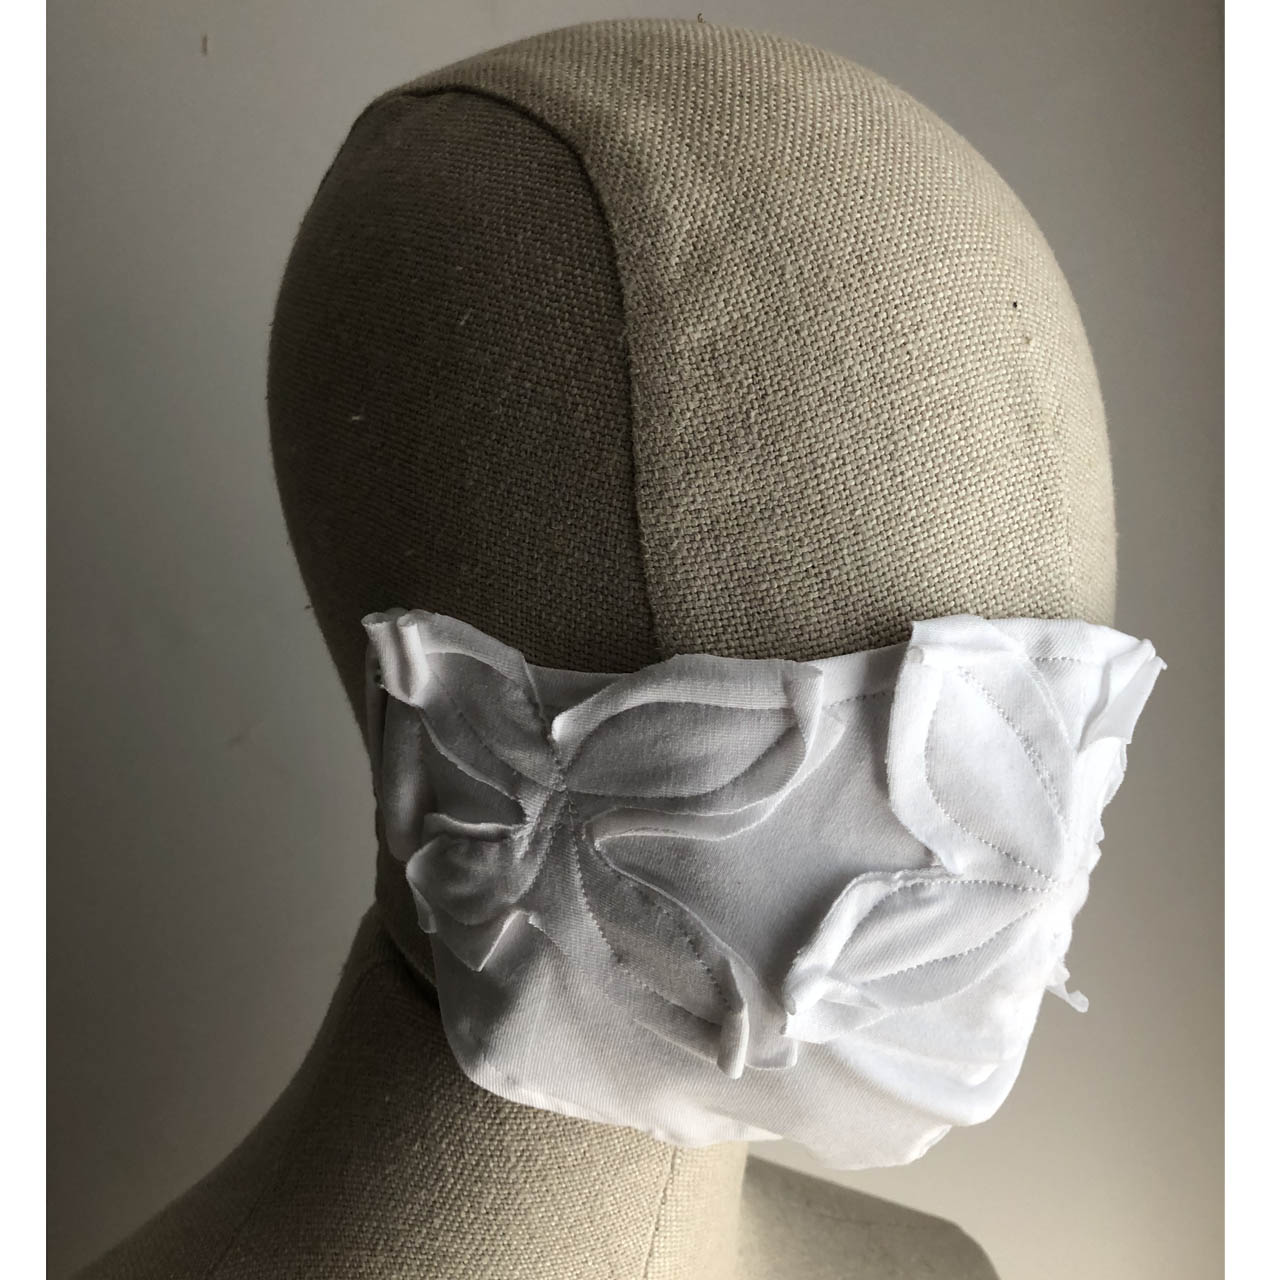 white mask - floral design - $15 AUD plus post